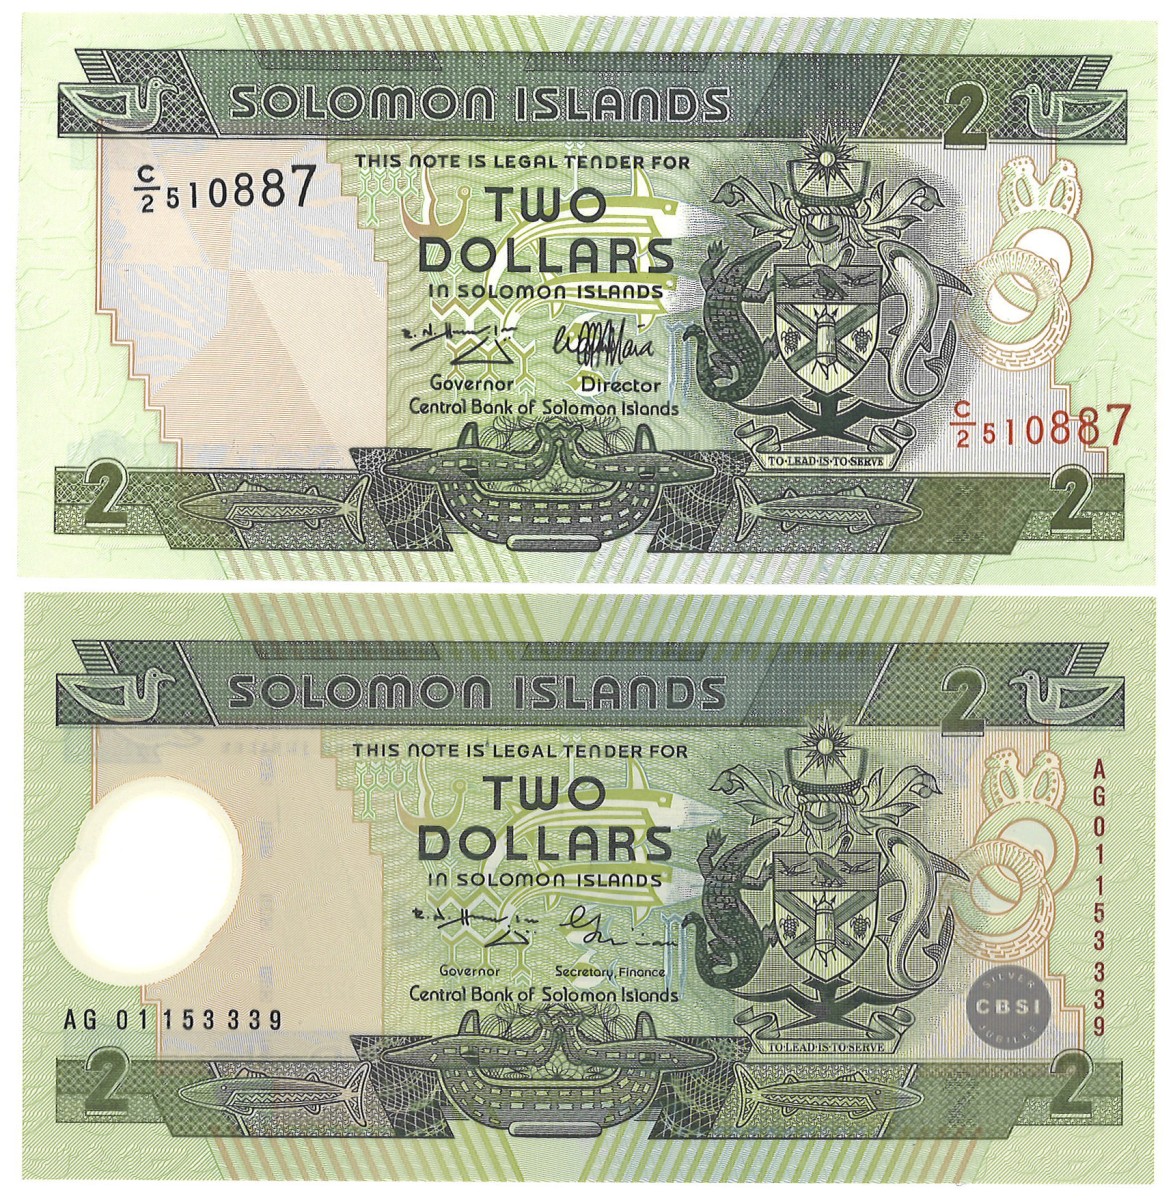 Solomon Islands. 2/2 Dollars. Banknotes. Type ND. - UNC.